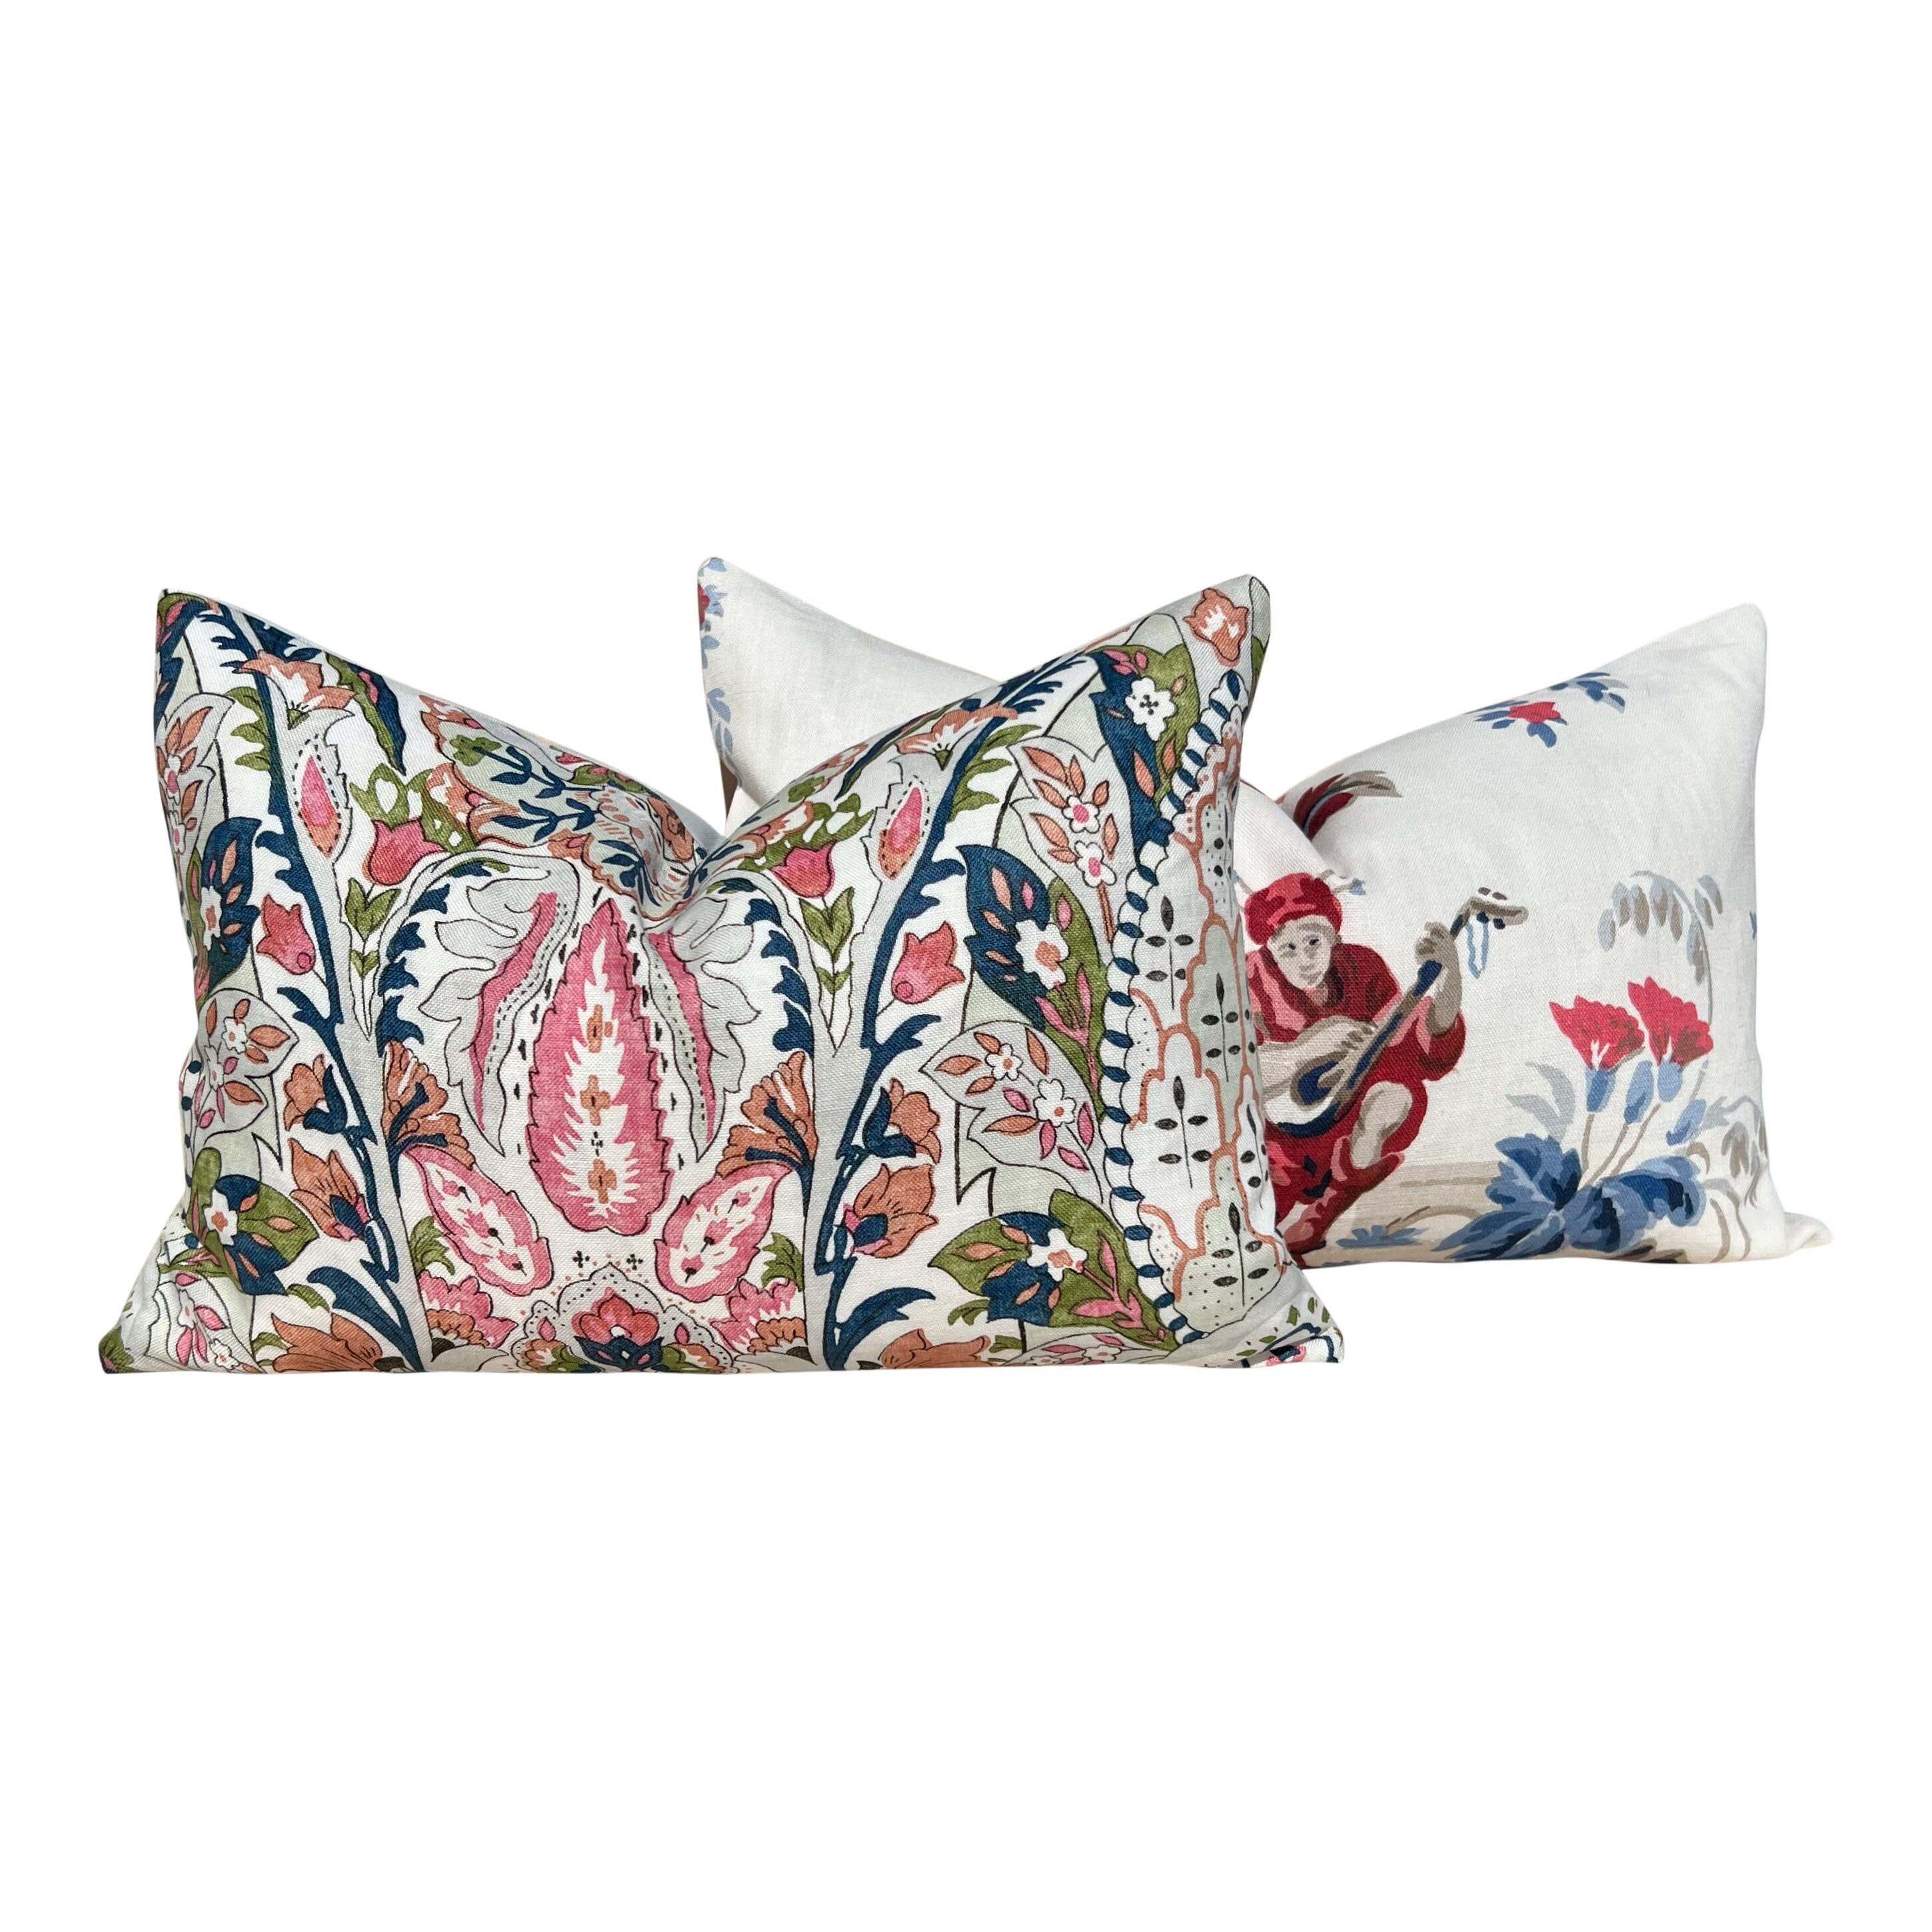 Schumacher Layla Paisley Lumbar Pillow in Multi Color. Designer Pillows, Accent Rectangular Pillows, High End Pillow Covers.